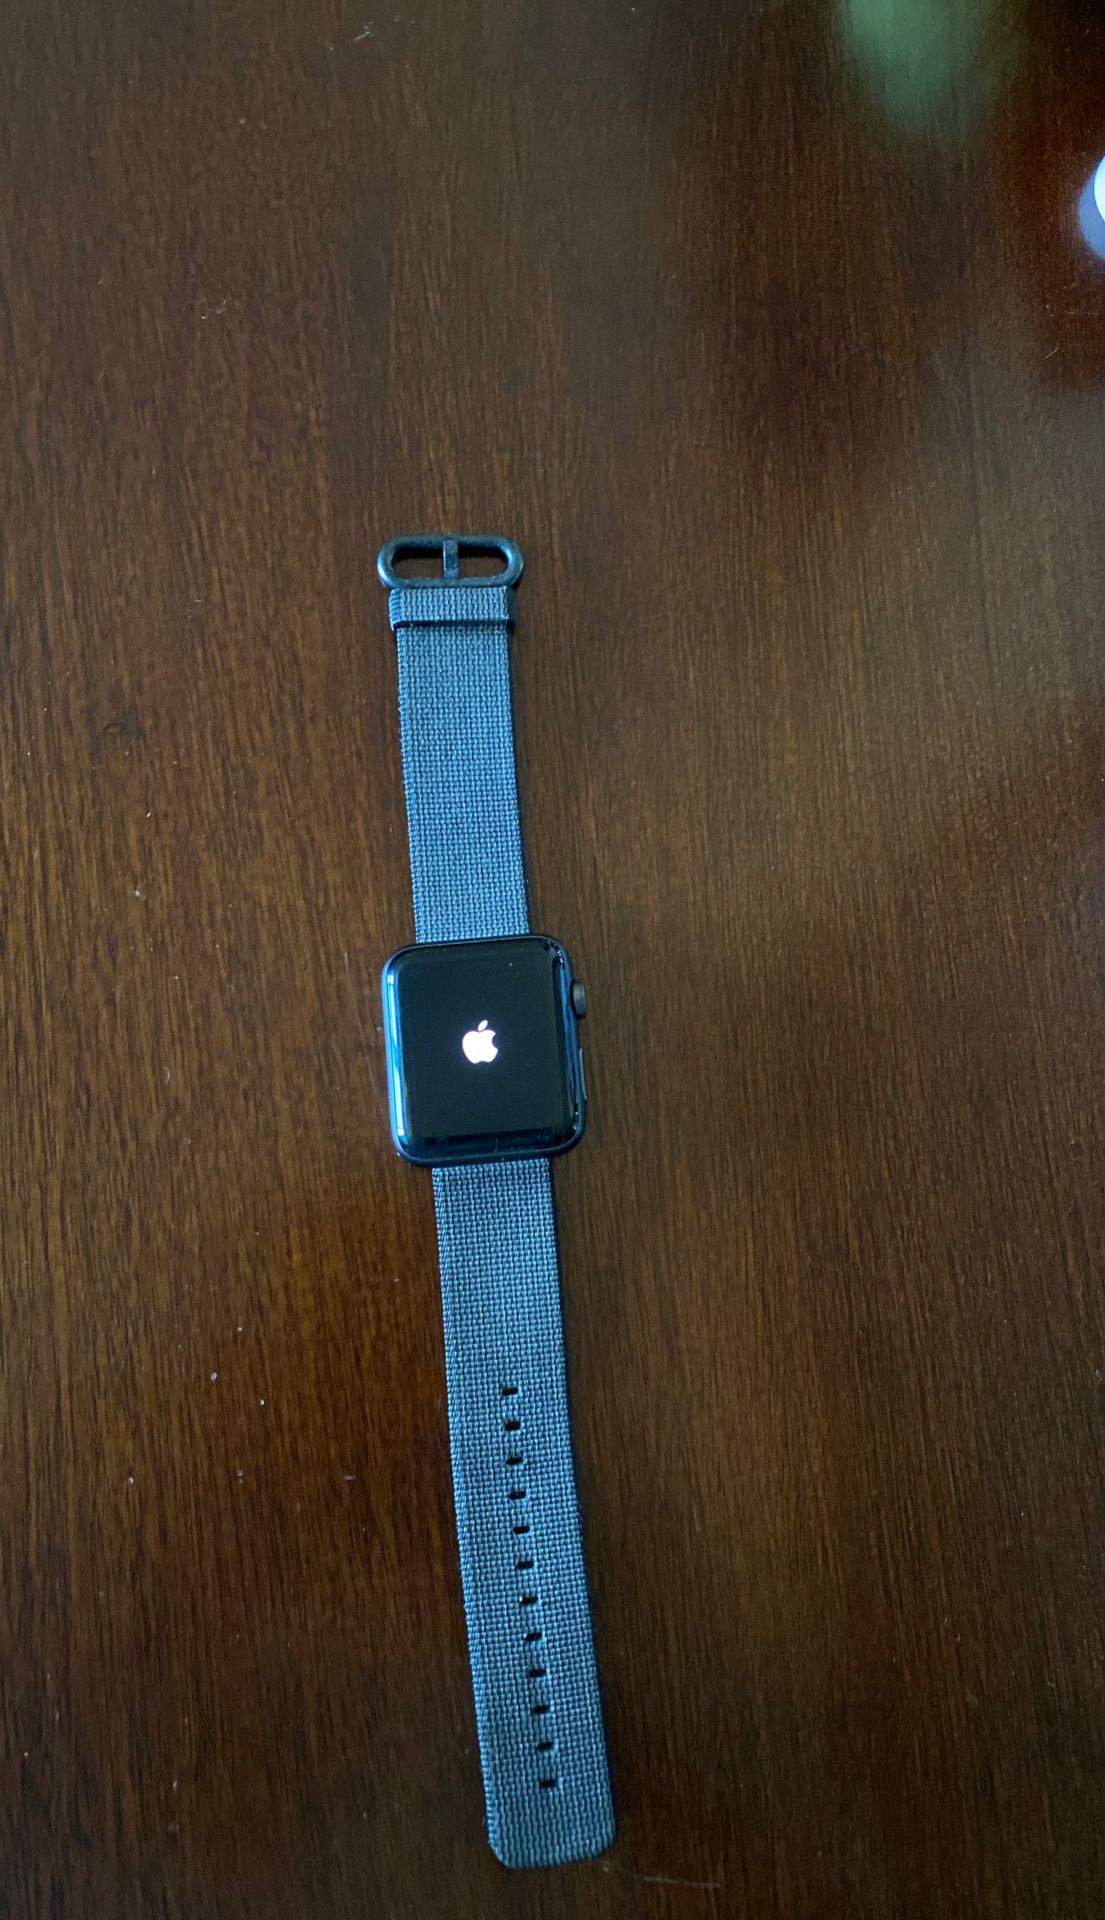 Apple Watch series 2. 44mm Aluminum case